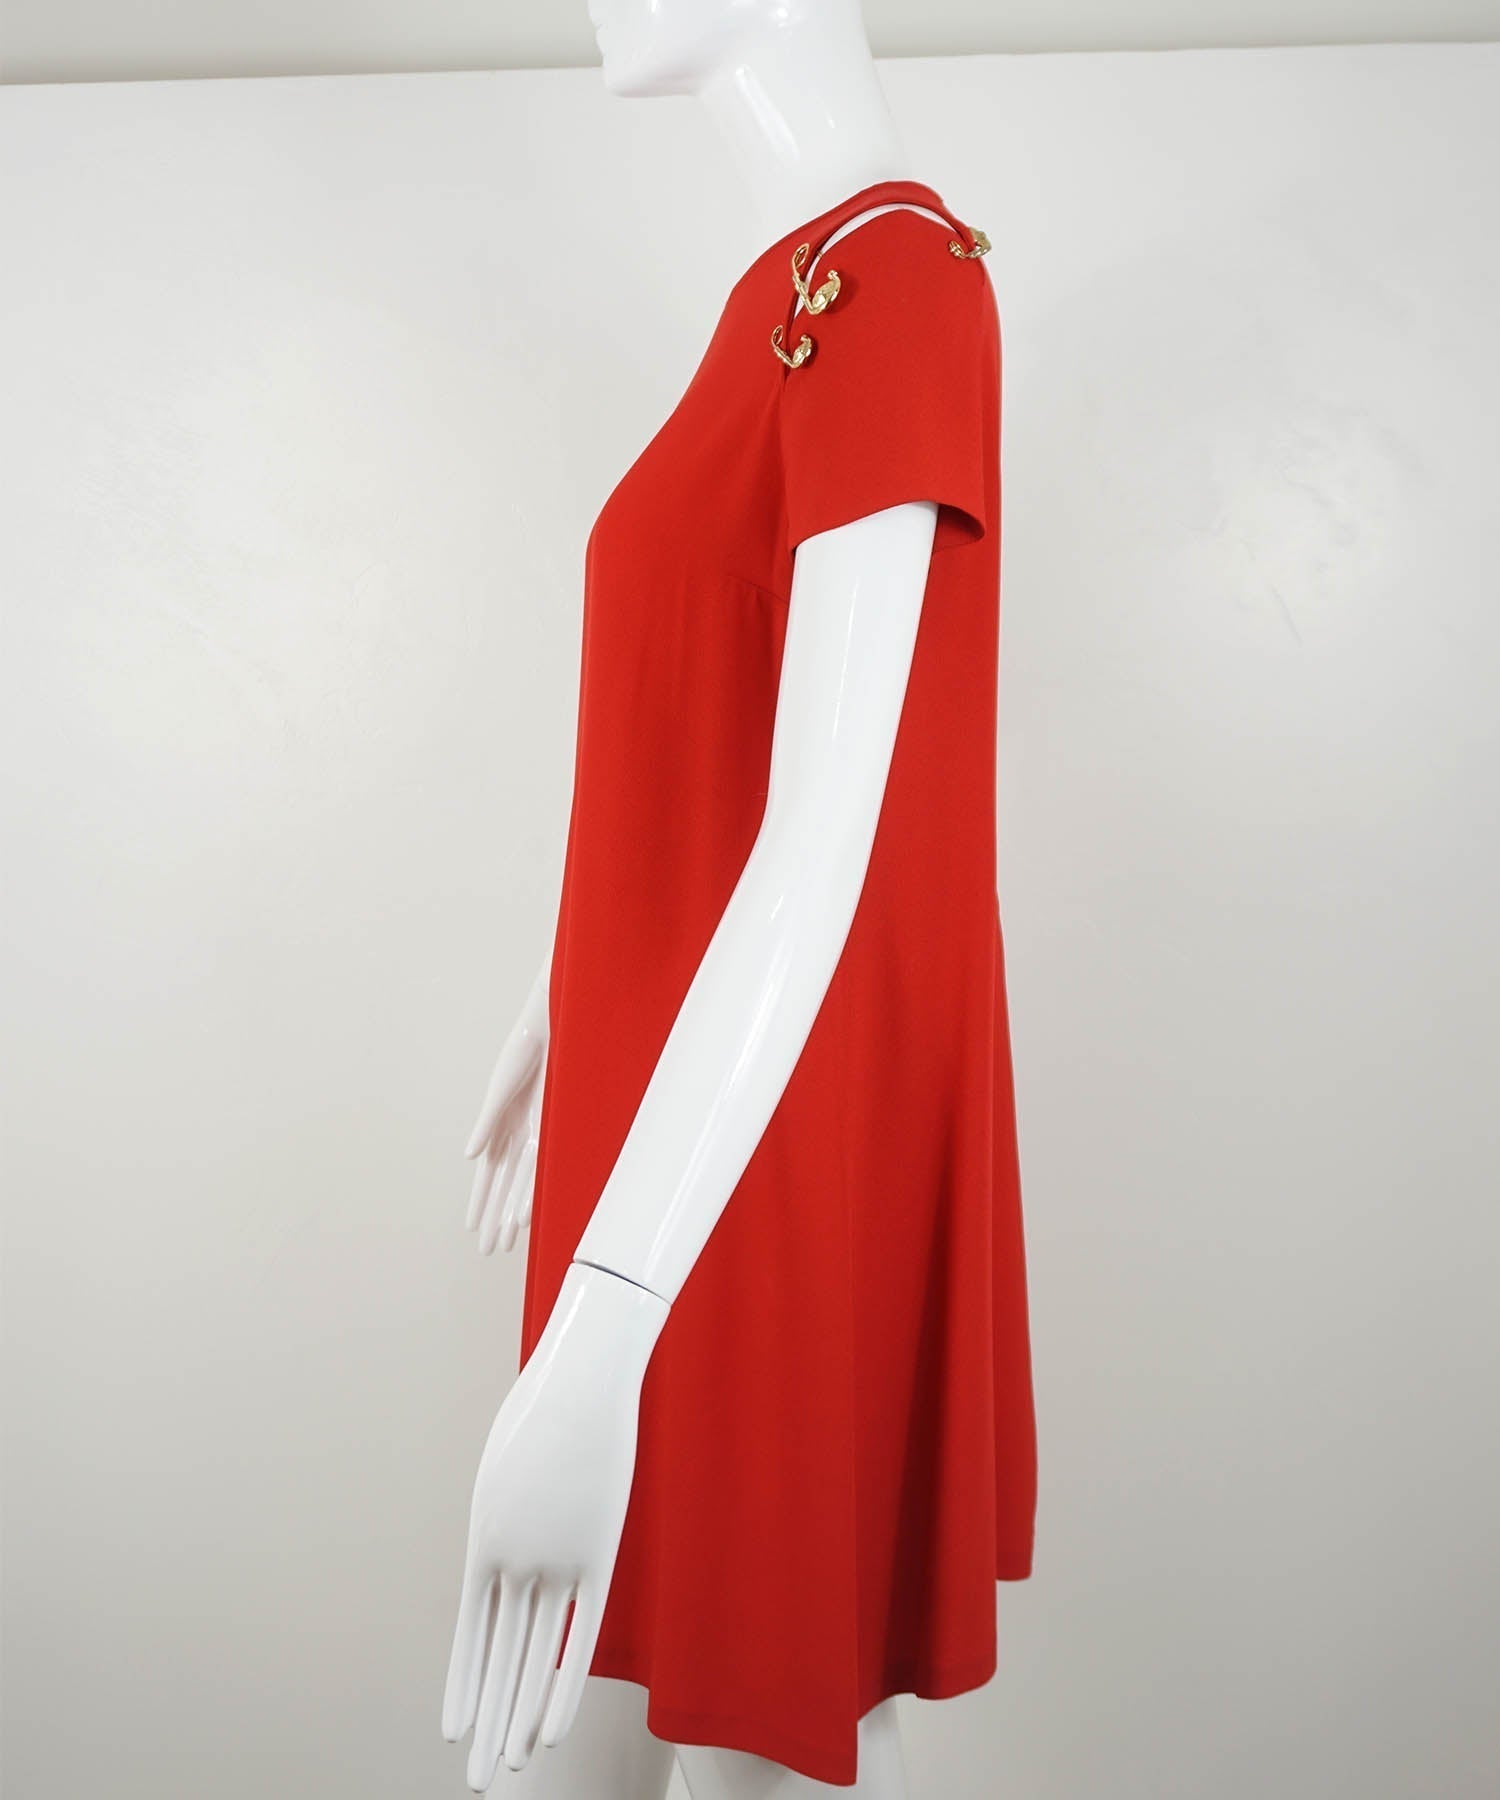 Versus Versace Vintage 1990's Safety Pin Dress